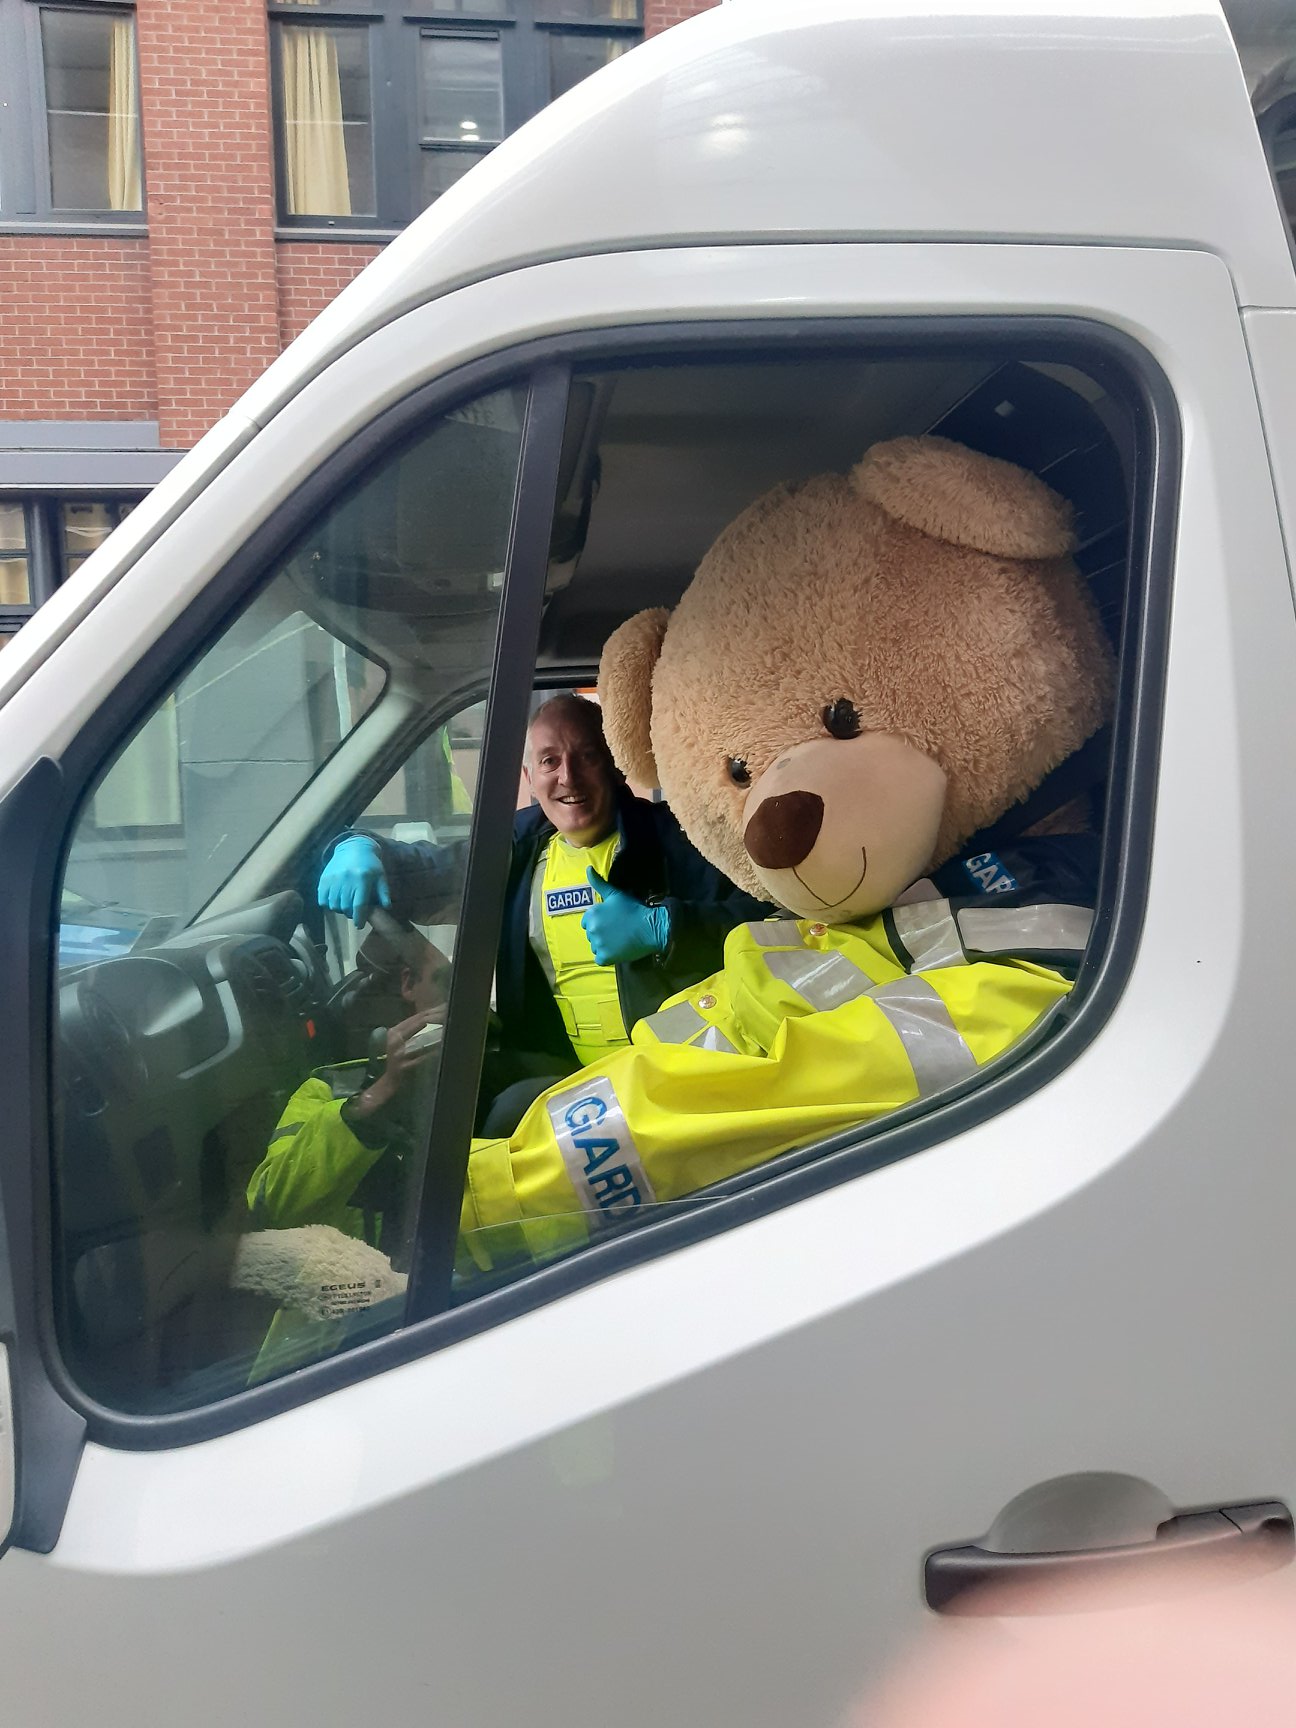 愛爾蘭人的幽默: Garda 愛爾蘭警察帶著遺失小熊做防疫宣傳 Teddy helps out for Garda duties during Covid-19